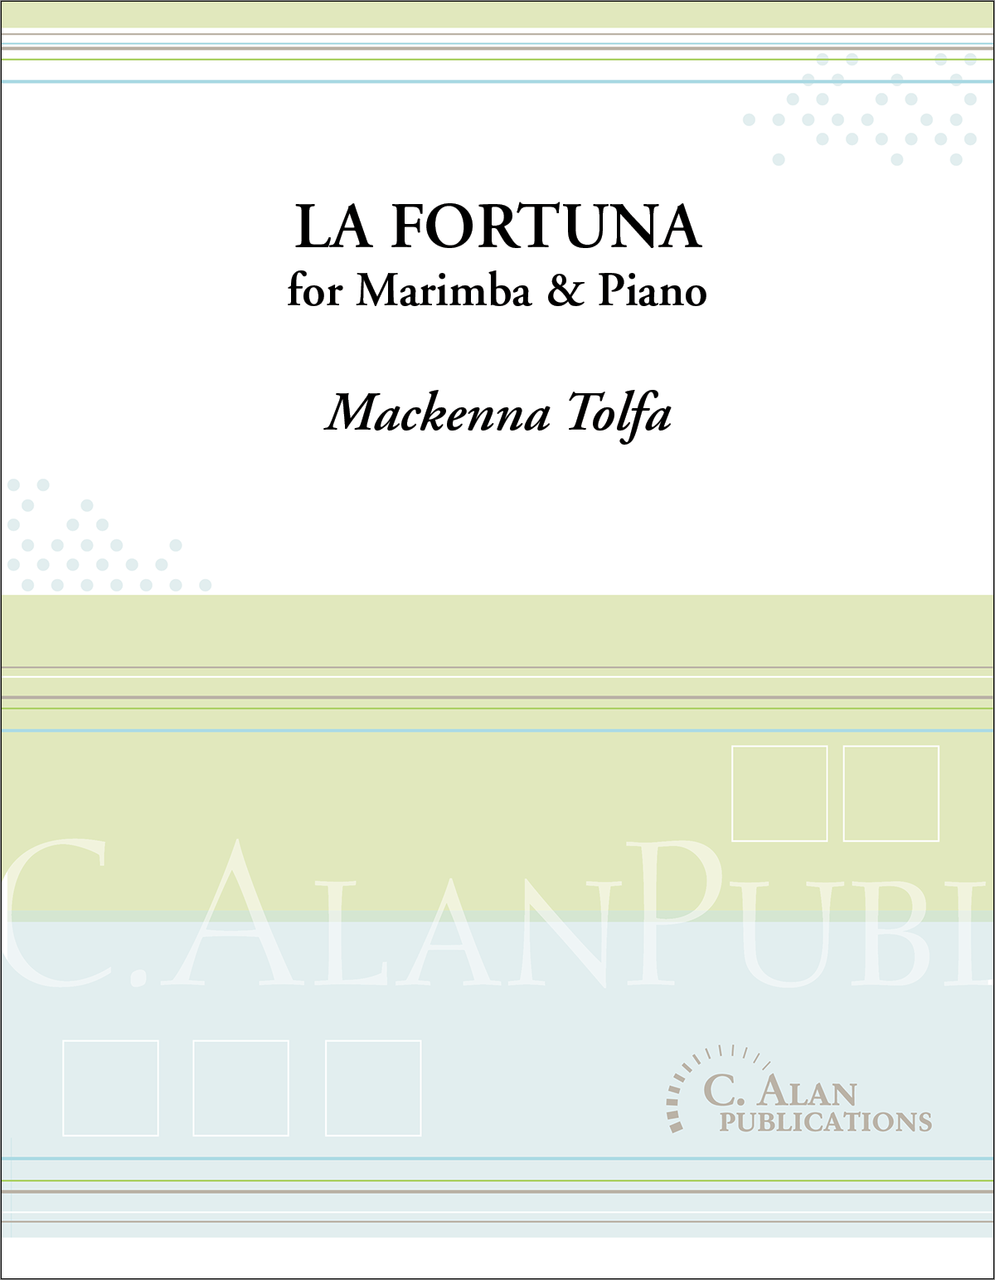 La Fortuna by Mackenna Tolta